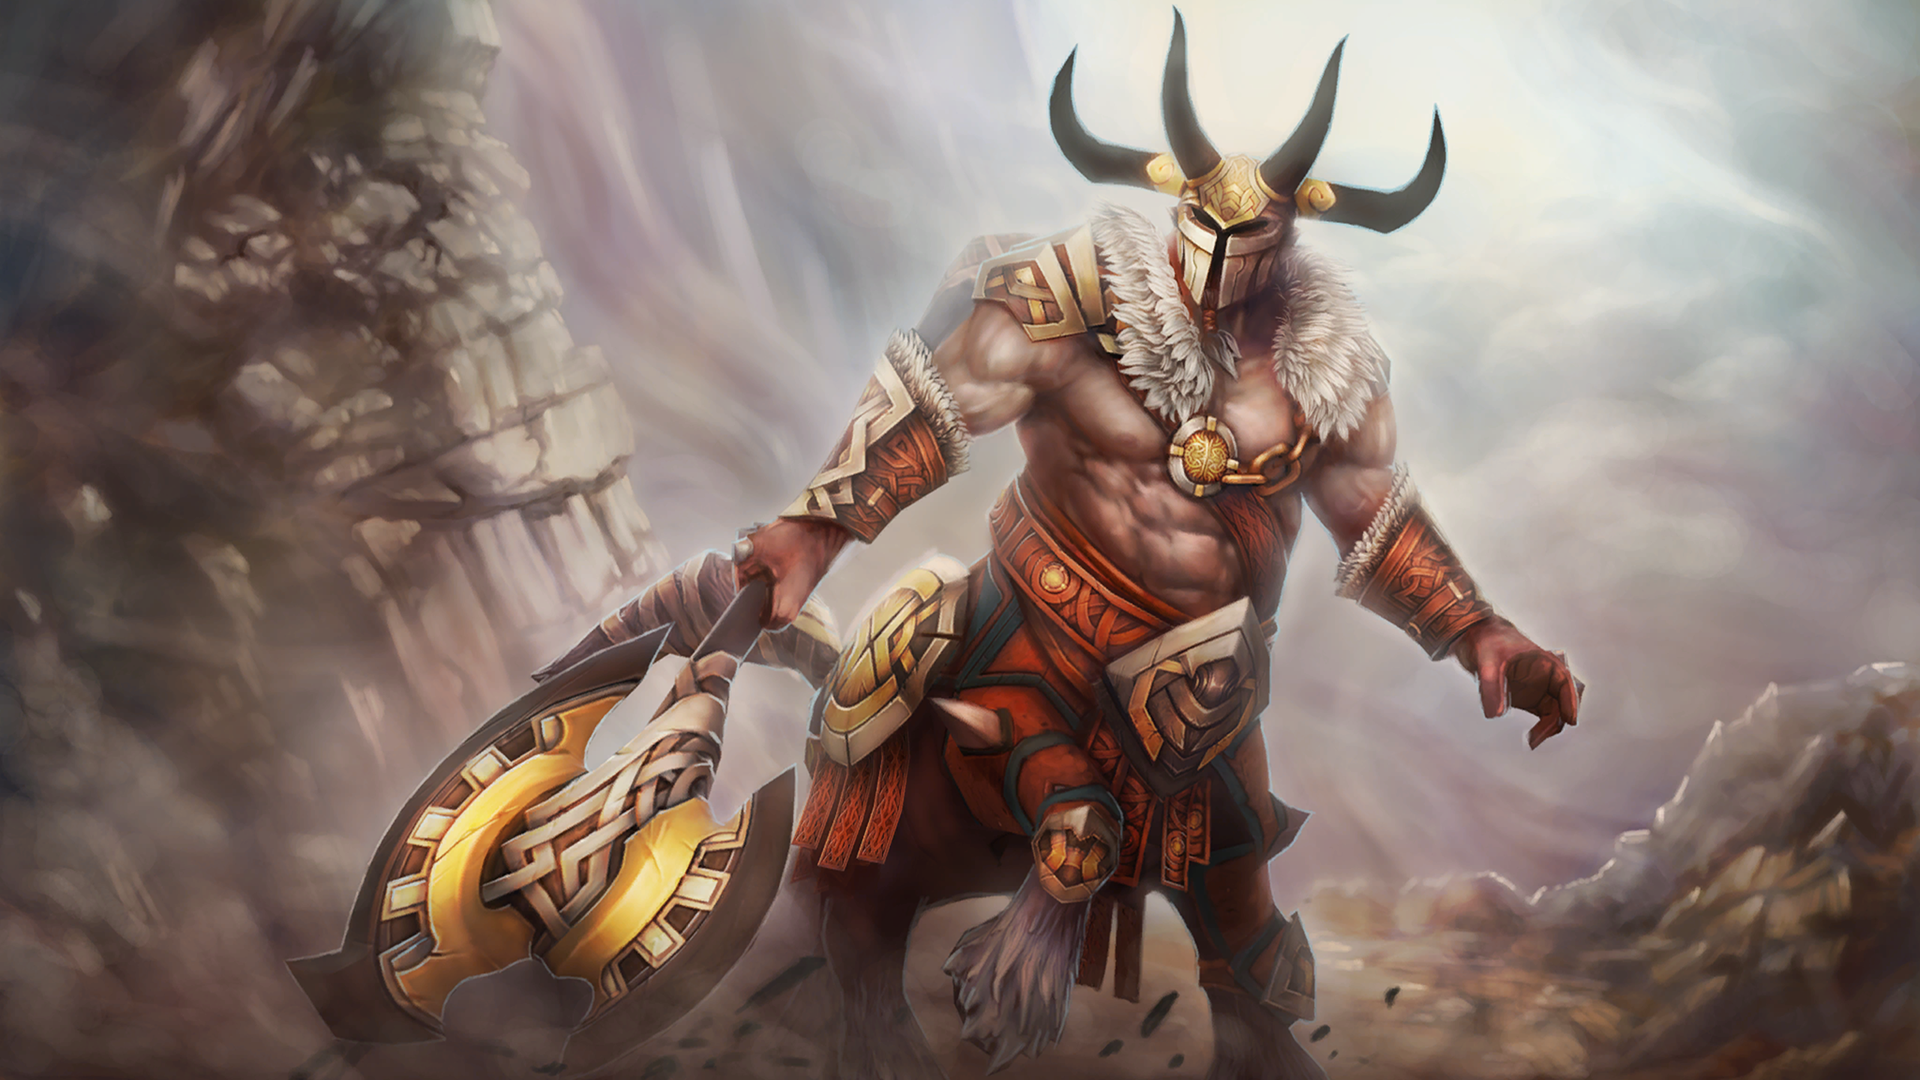 dota 2 loading screen wallpaper,action adventure game,mythology,demon,warlord,fictional character